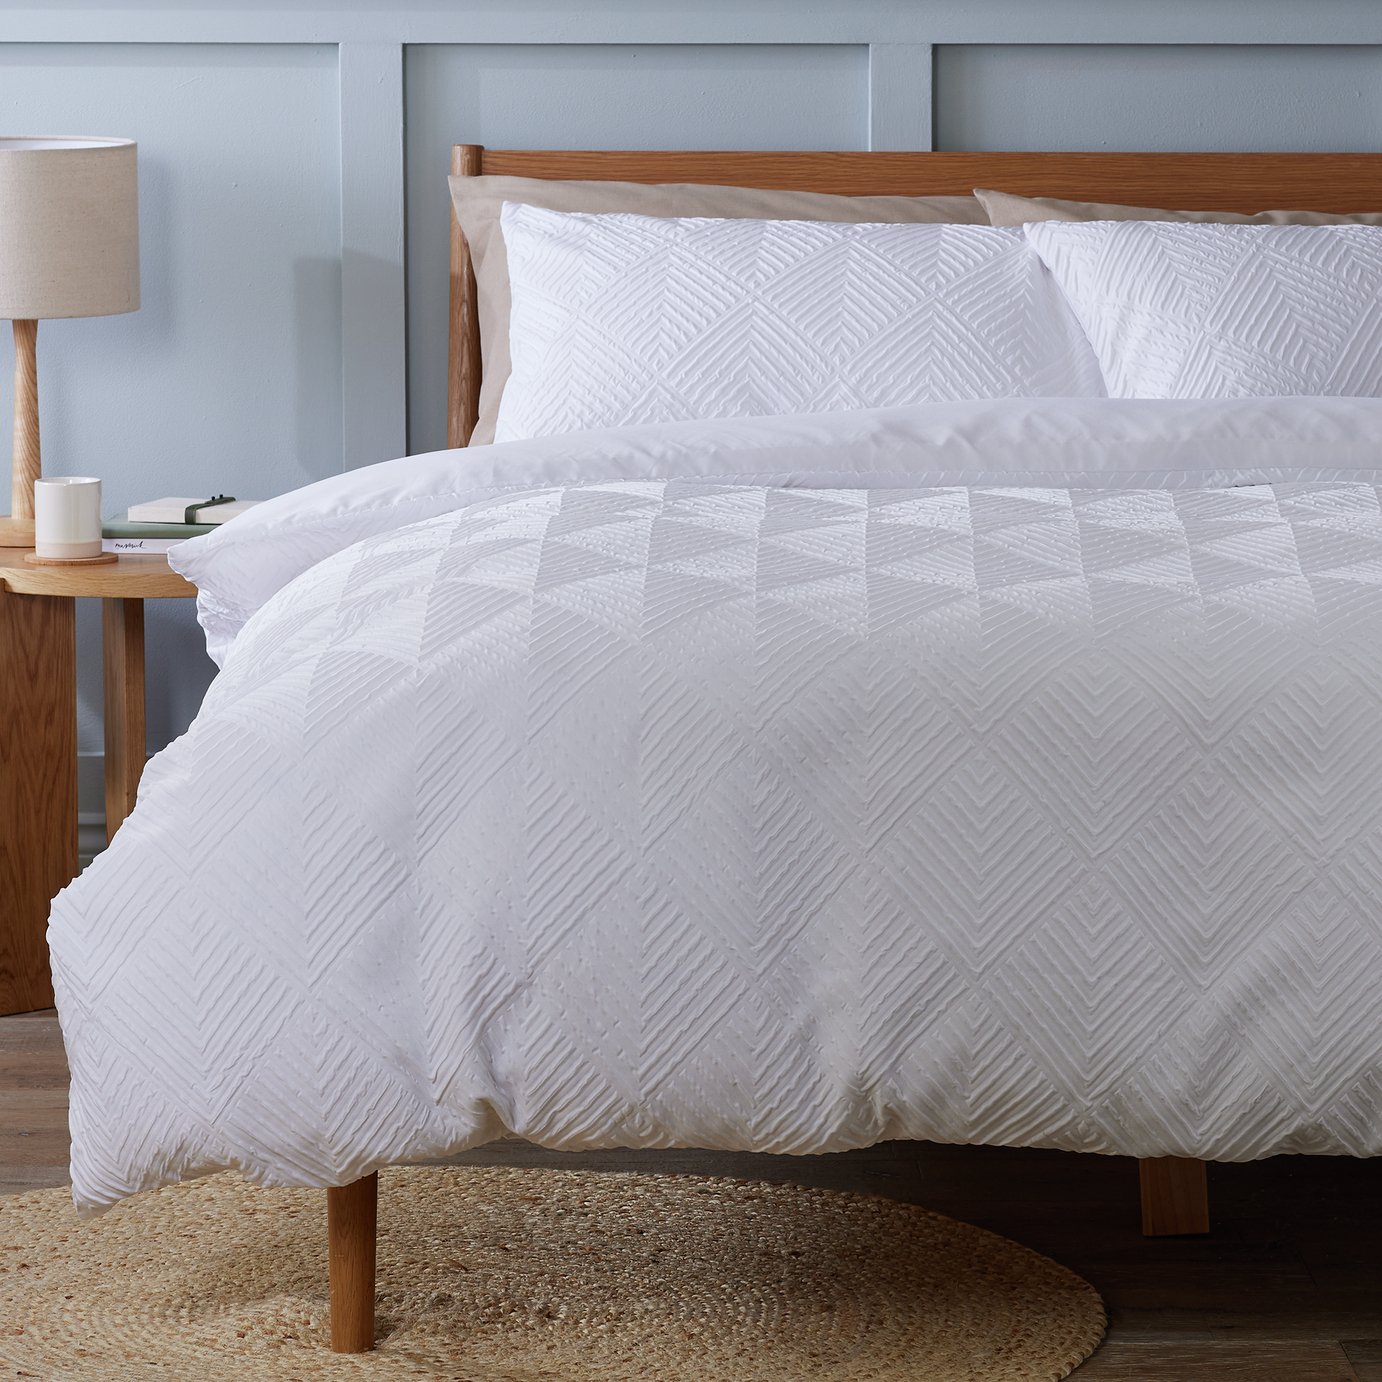 Argos Home Textured Embossed White Bedding Set - Double